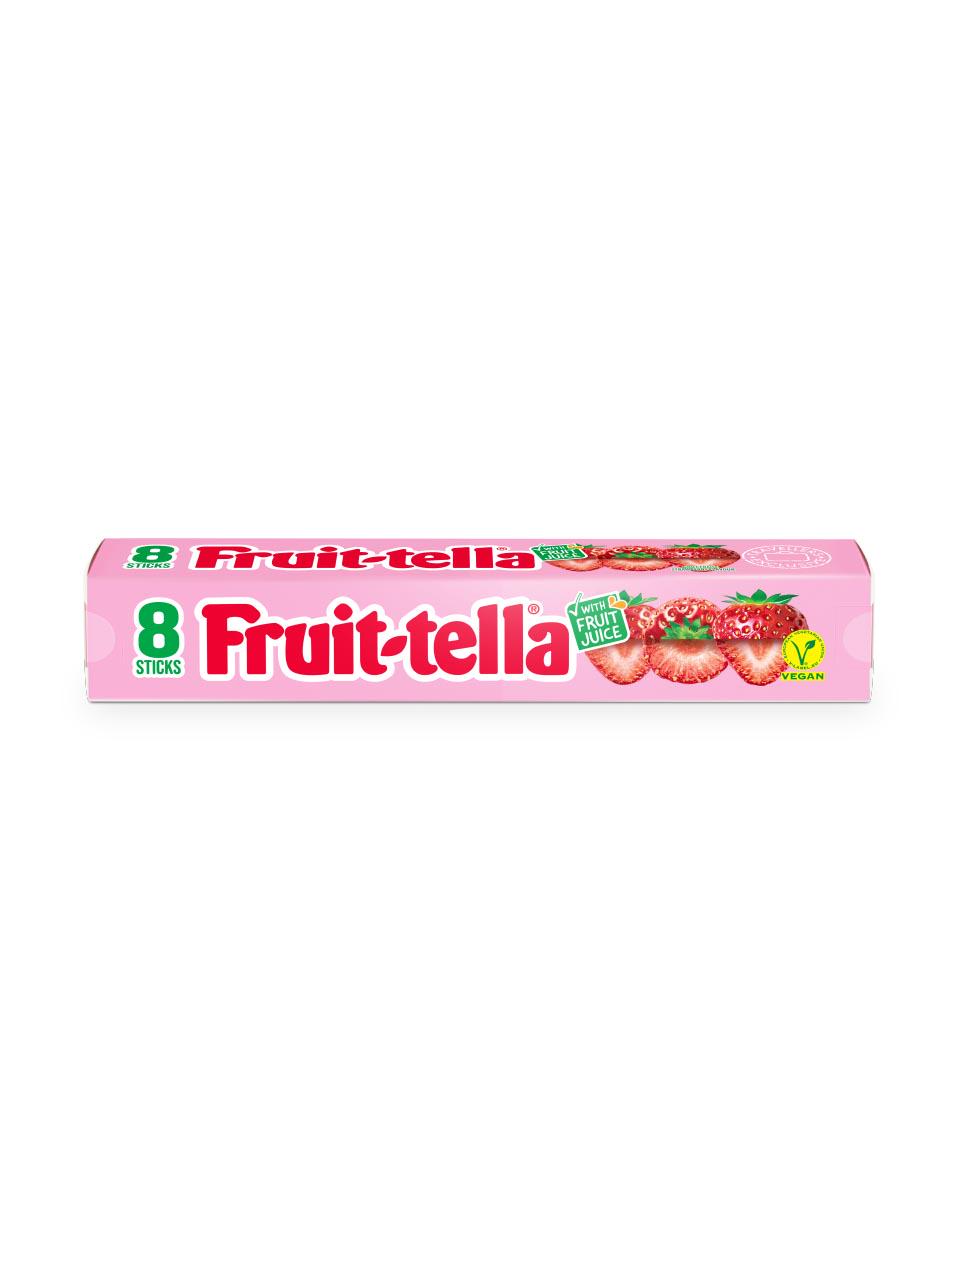 Fruittella Jumbostick Strawberry vegan